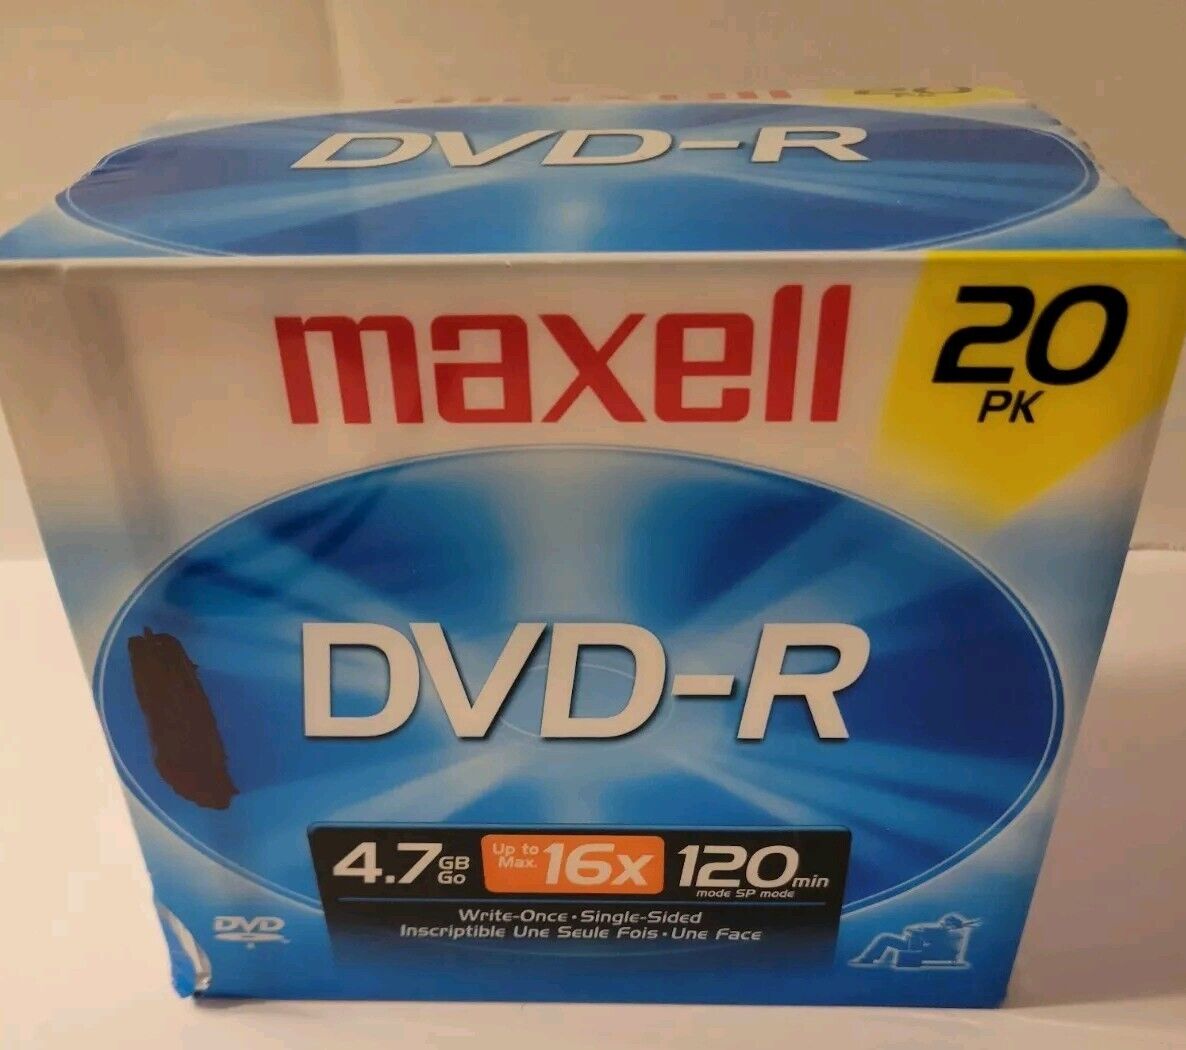 Maxell DVD-R Data & Video 20 Pack NEW SEALED Blank Dvd Discs 4.7Gb 16x 120min